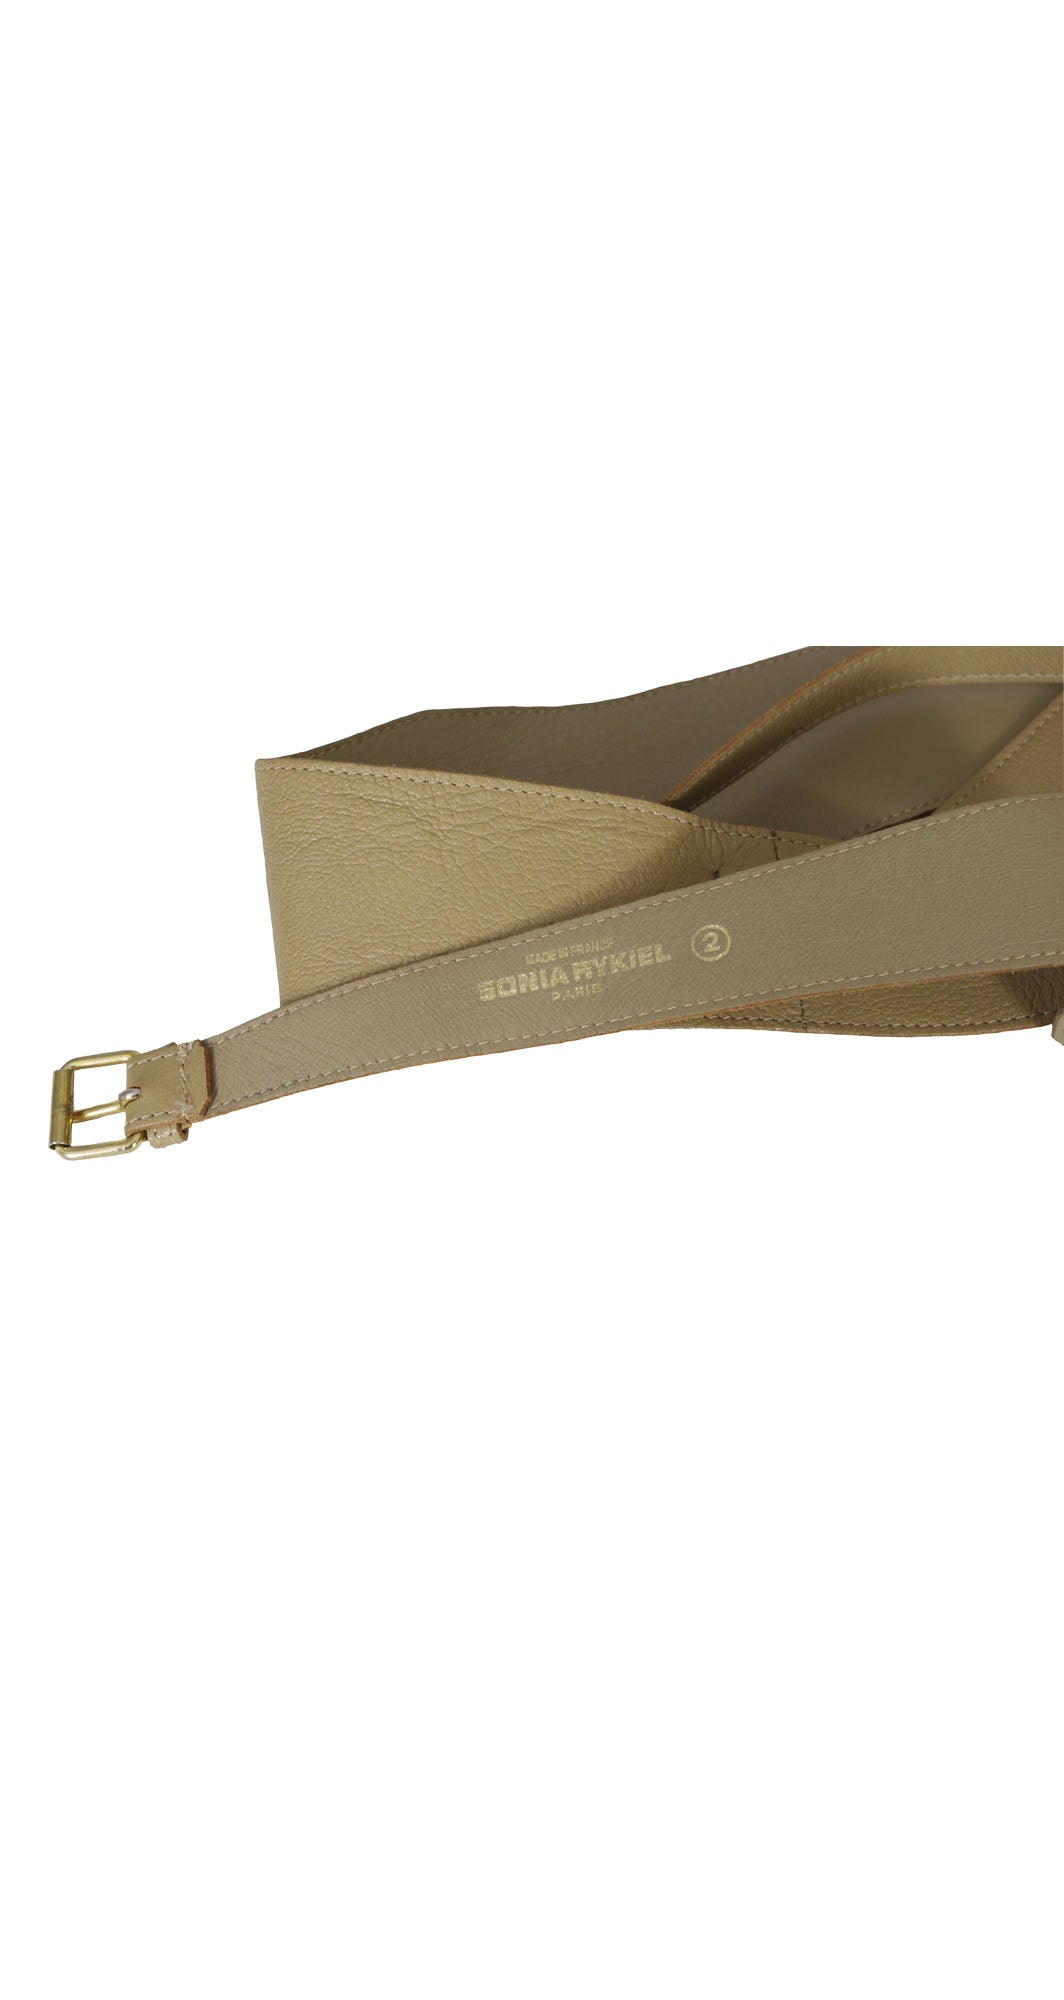 1980s Wide Tan Leather Obi Style Belt